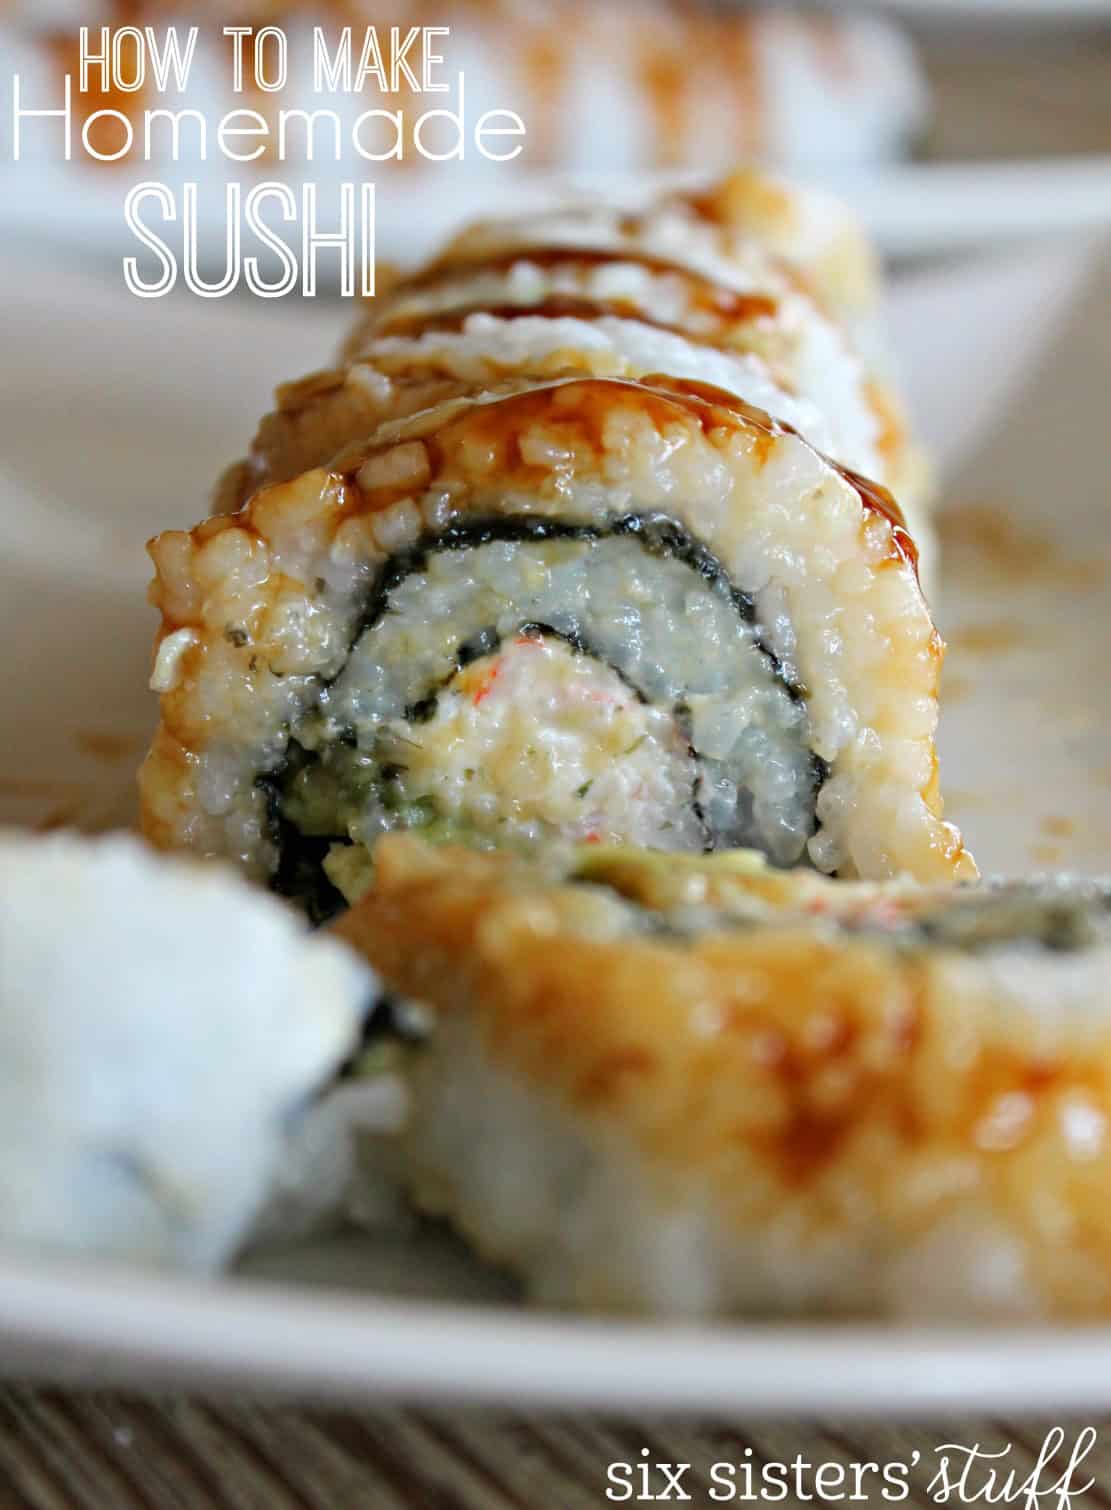 https://www.sixsistersstuff.com/wp-content/uploads/2016/04/Sushi23.jpg